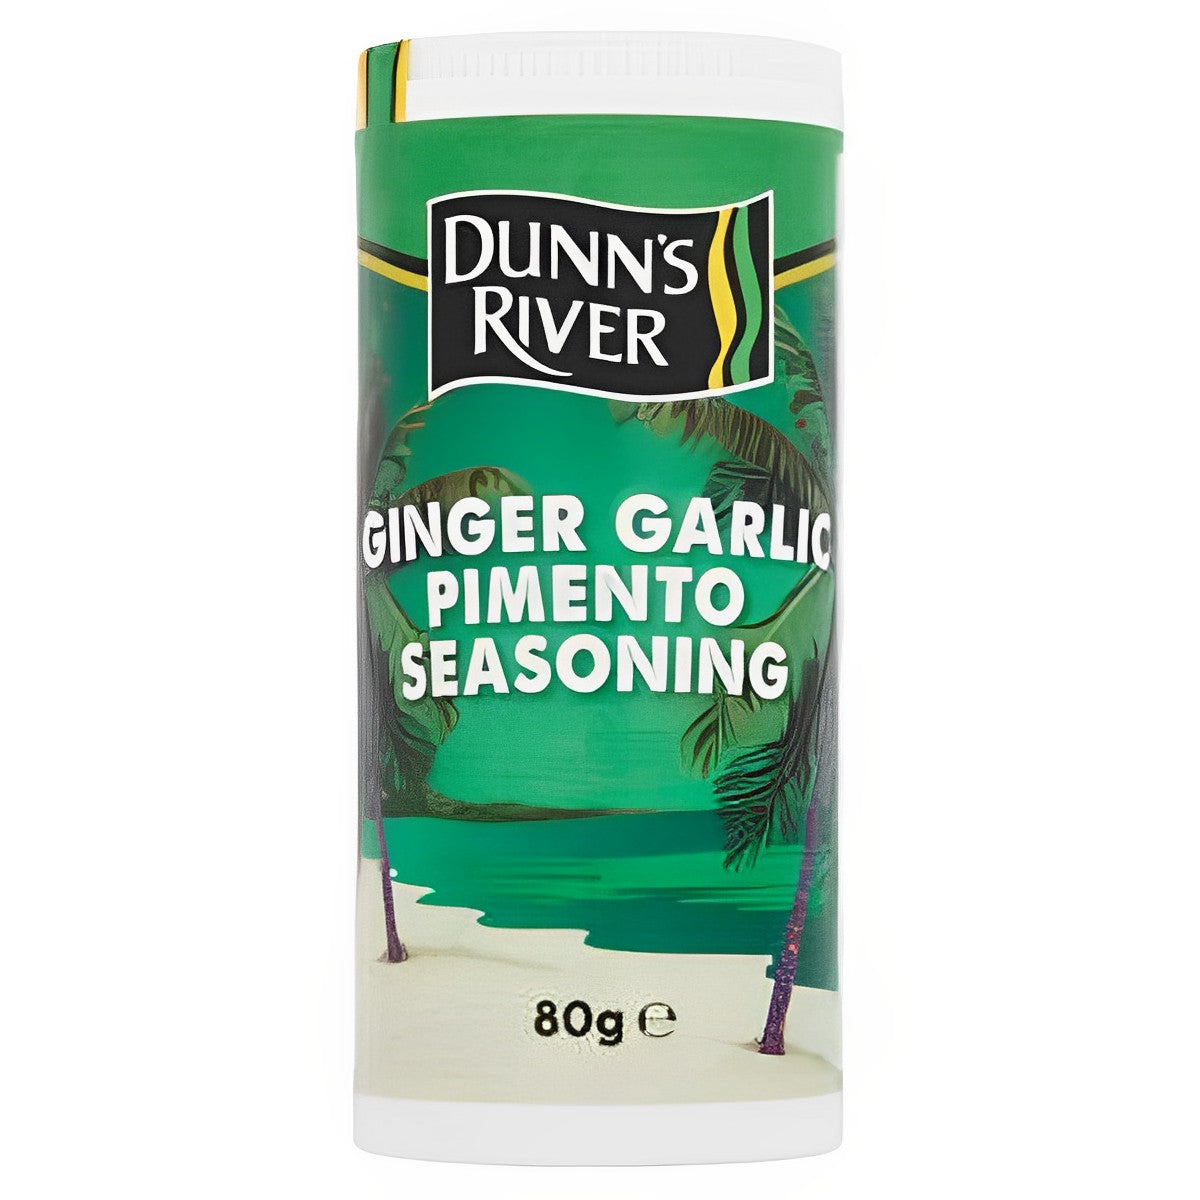 Dunn's River - Ginger Garlic Pimento Seasoning - 80g - Continental Food Store